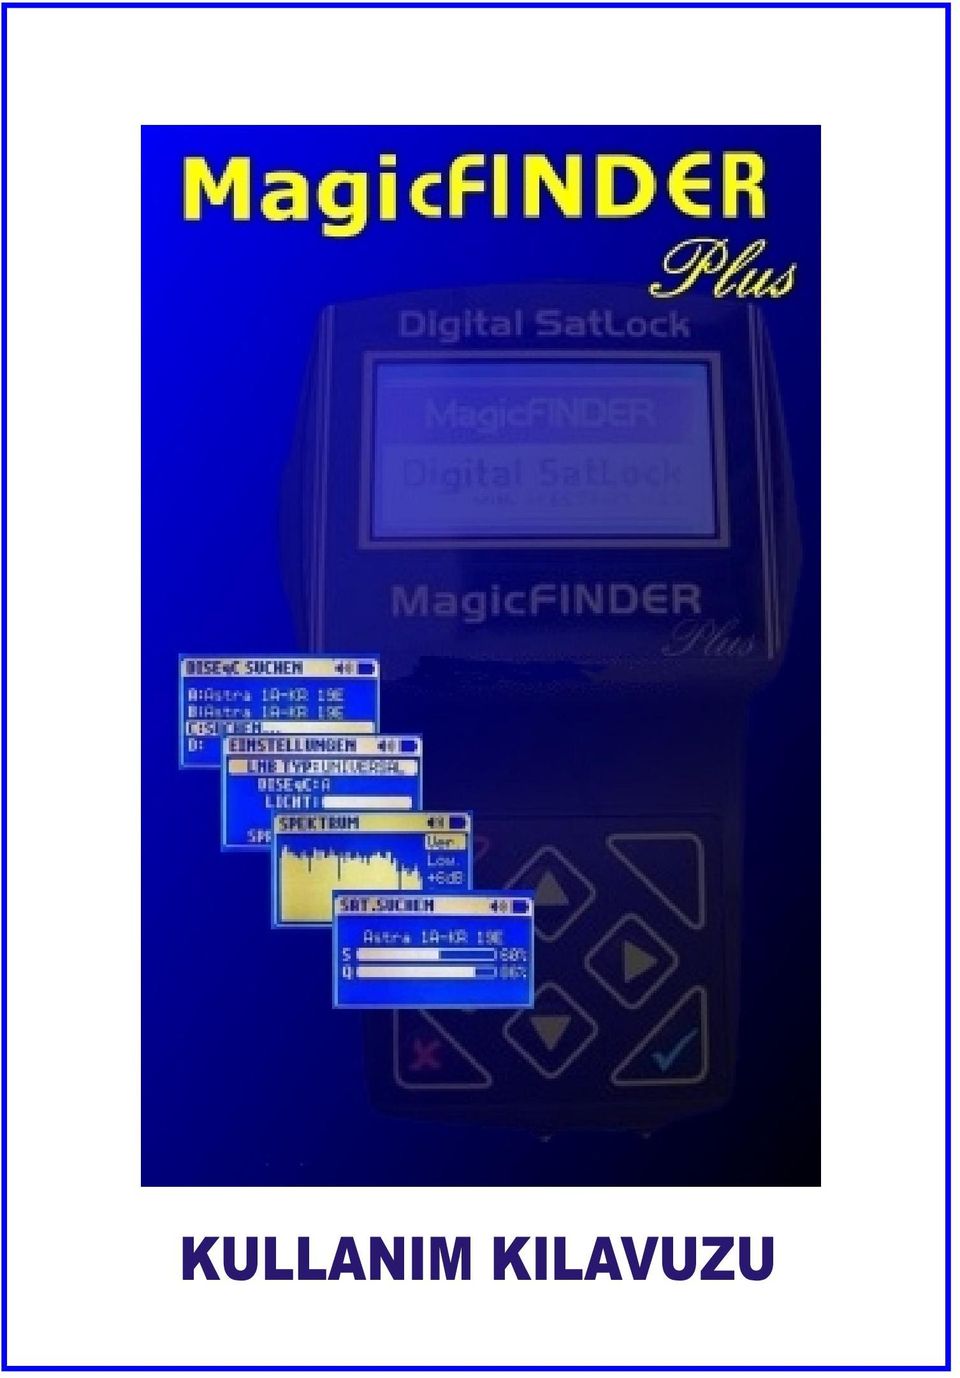 MagicFINDER Digital SatLock Kullanım Kılavuzu PDF Free Download